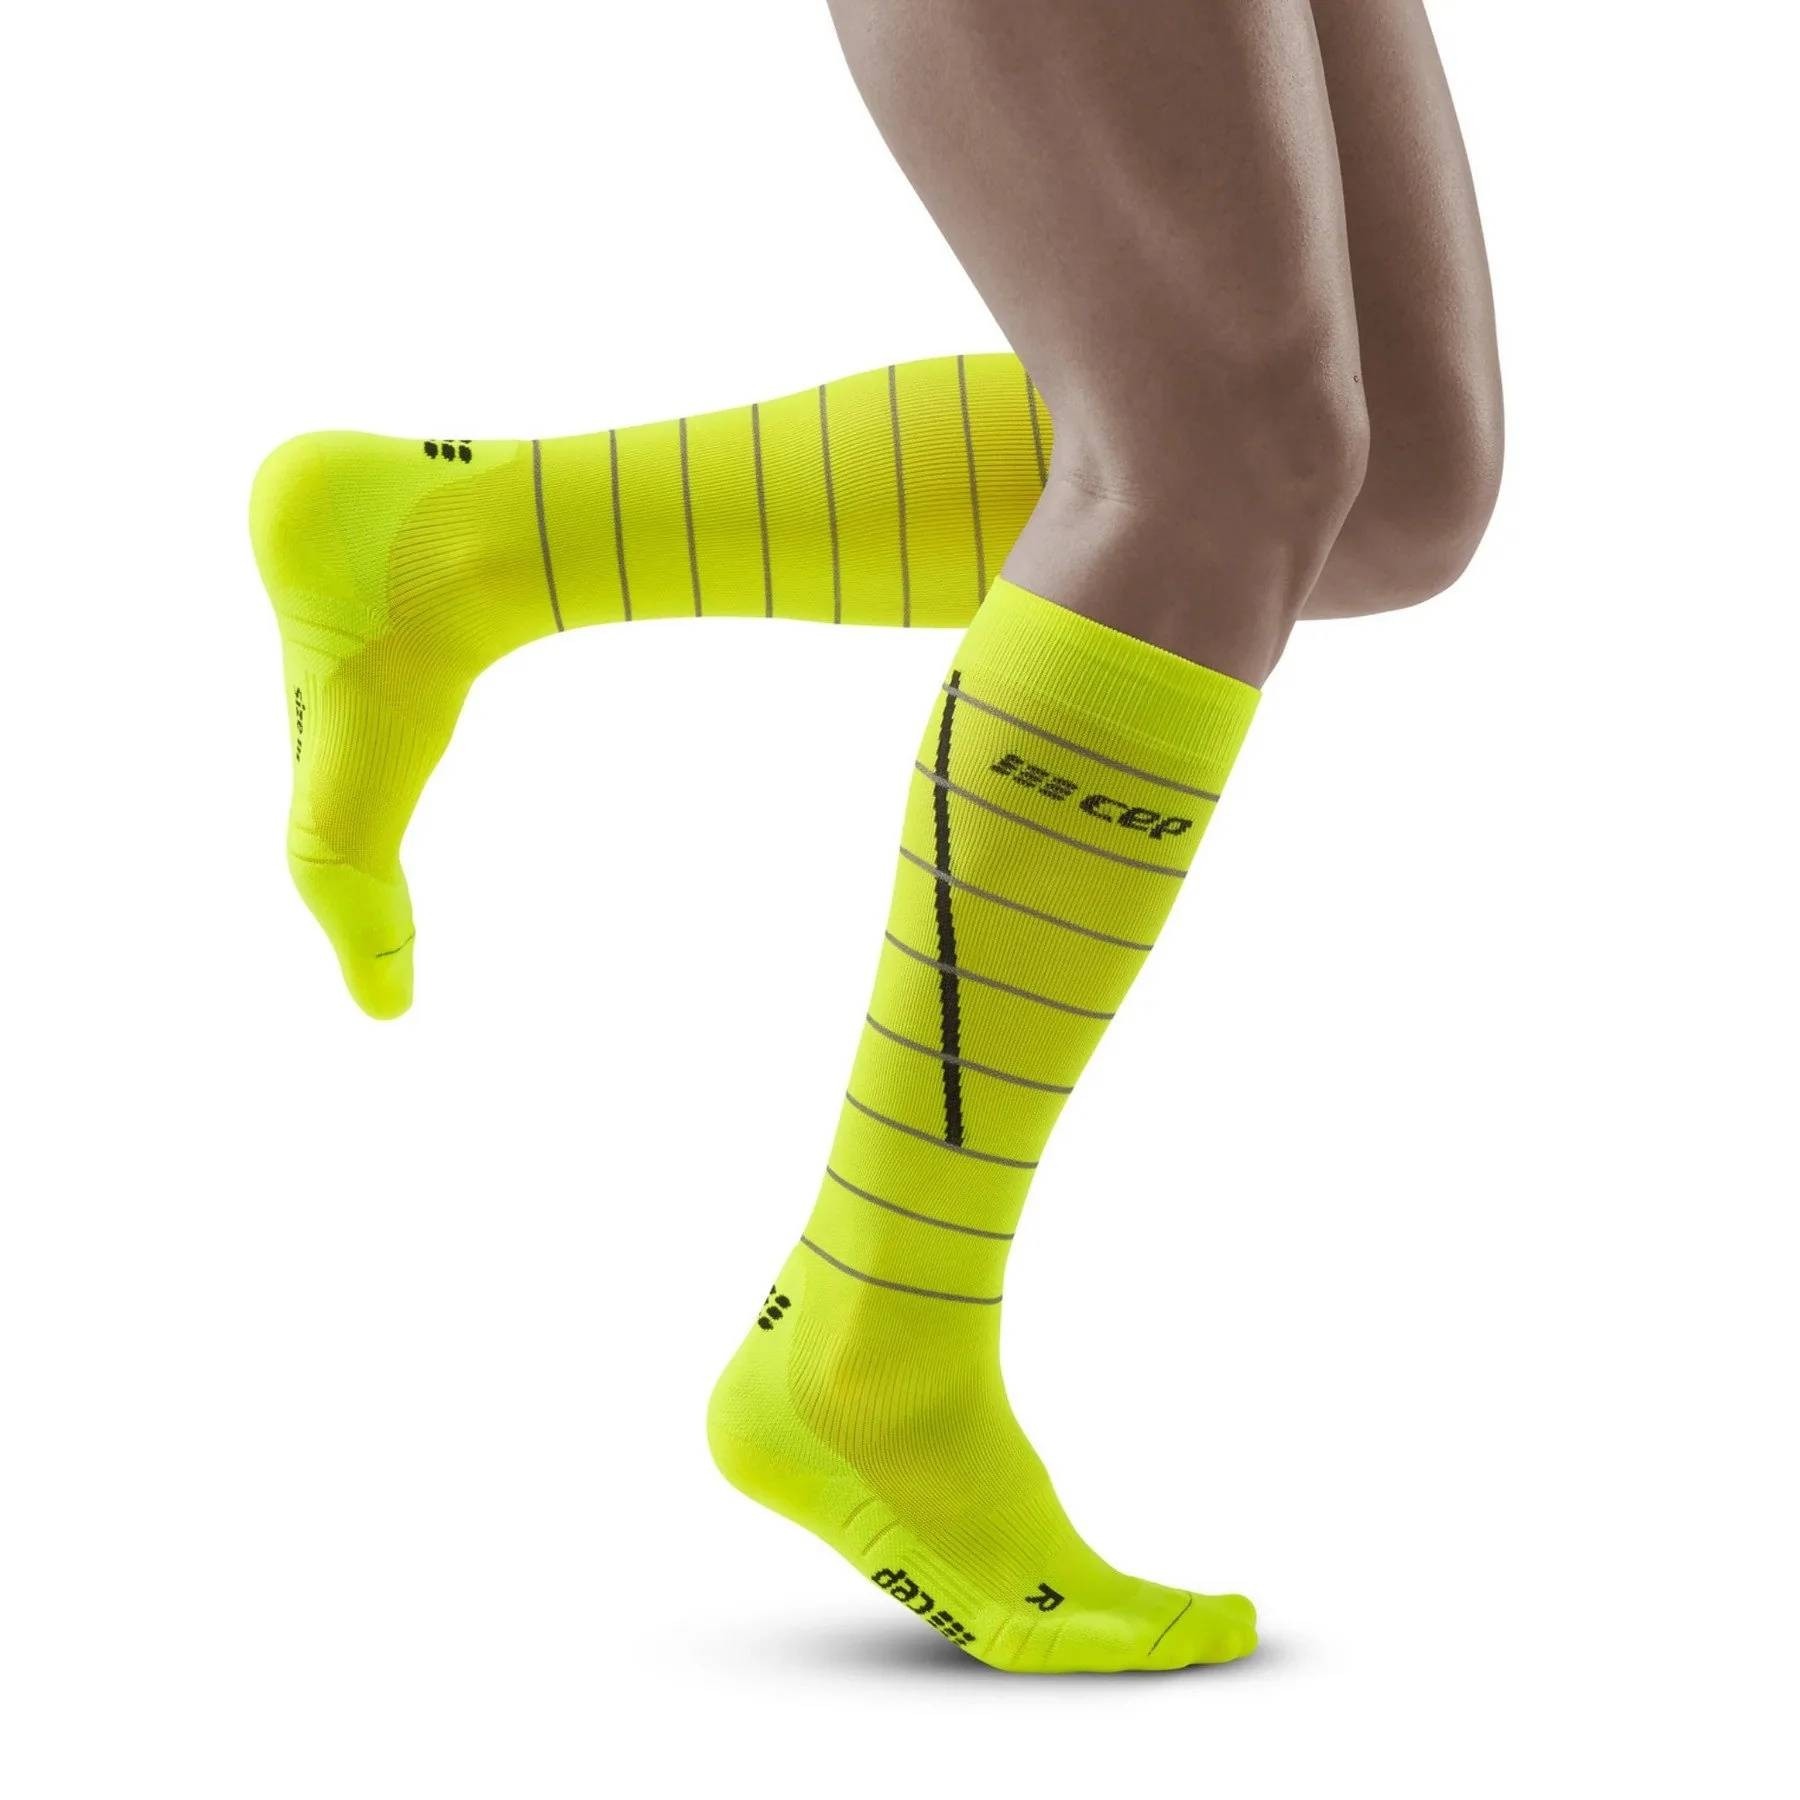 https://www.tesmasport.com/media/catalog/product/cache/3/image/9df78eab33525d08d6e5fb8d27136e95/c/e/cep-reflective-socks-neon-yellow-men.jpg